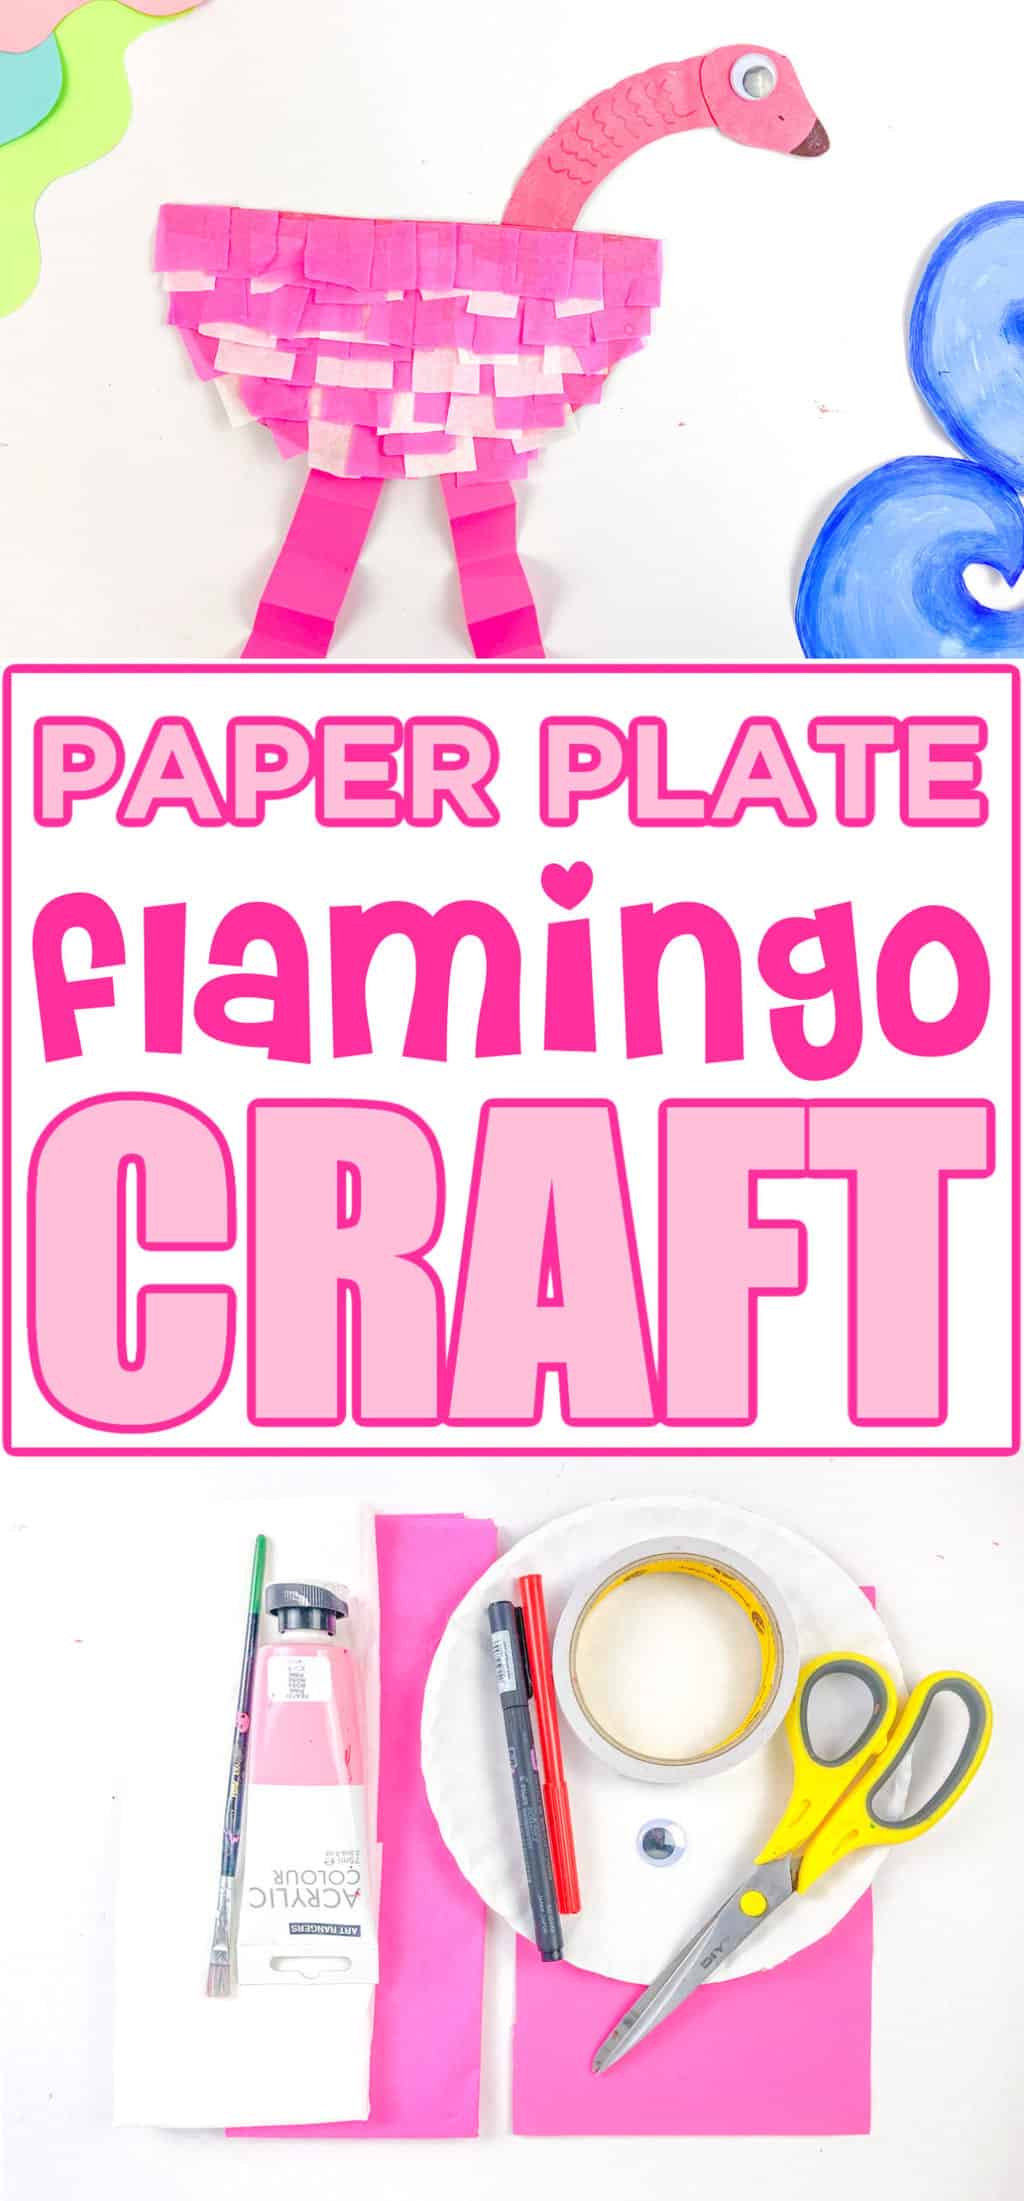 Flamingo Craft Paper Plate